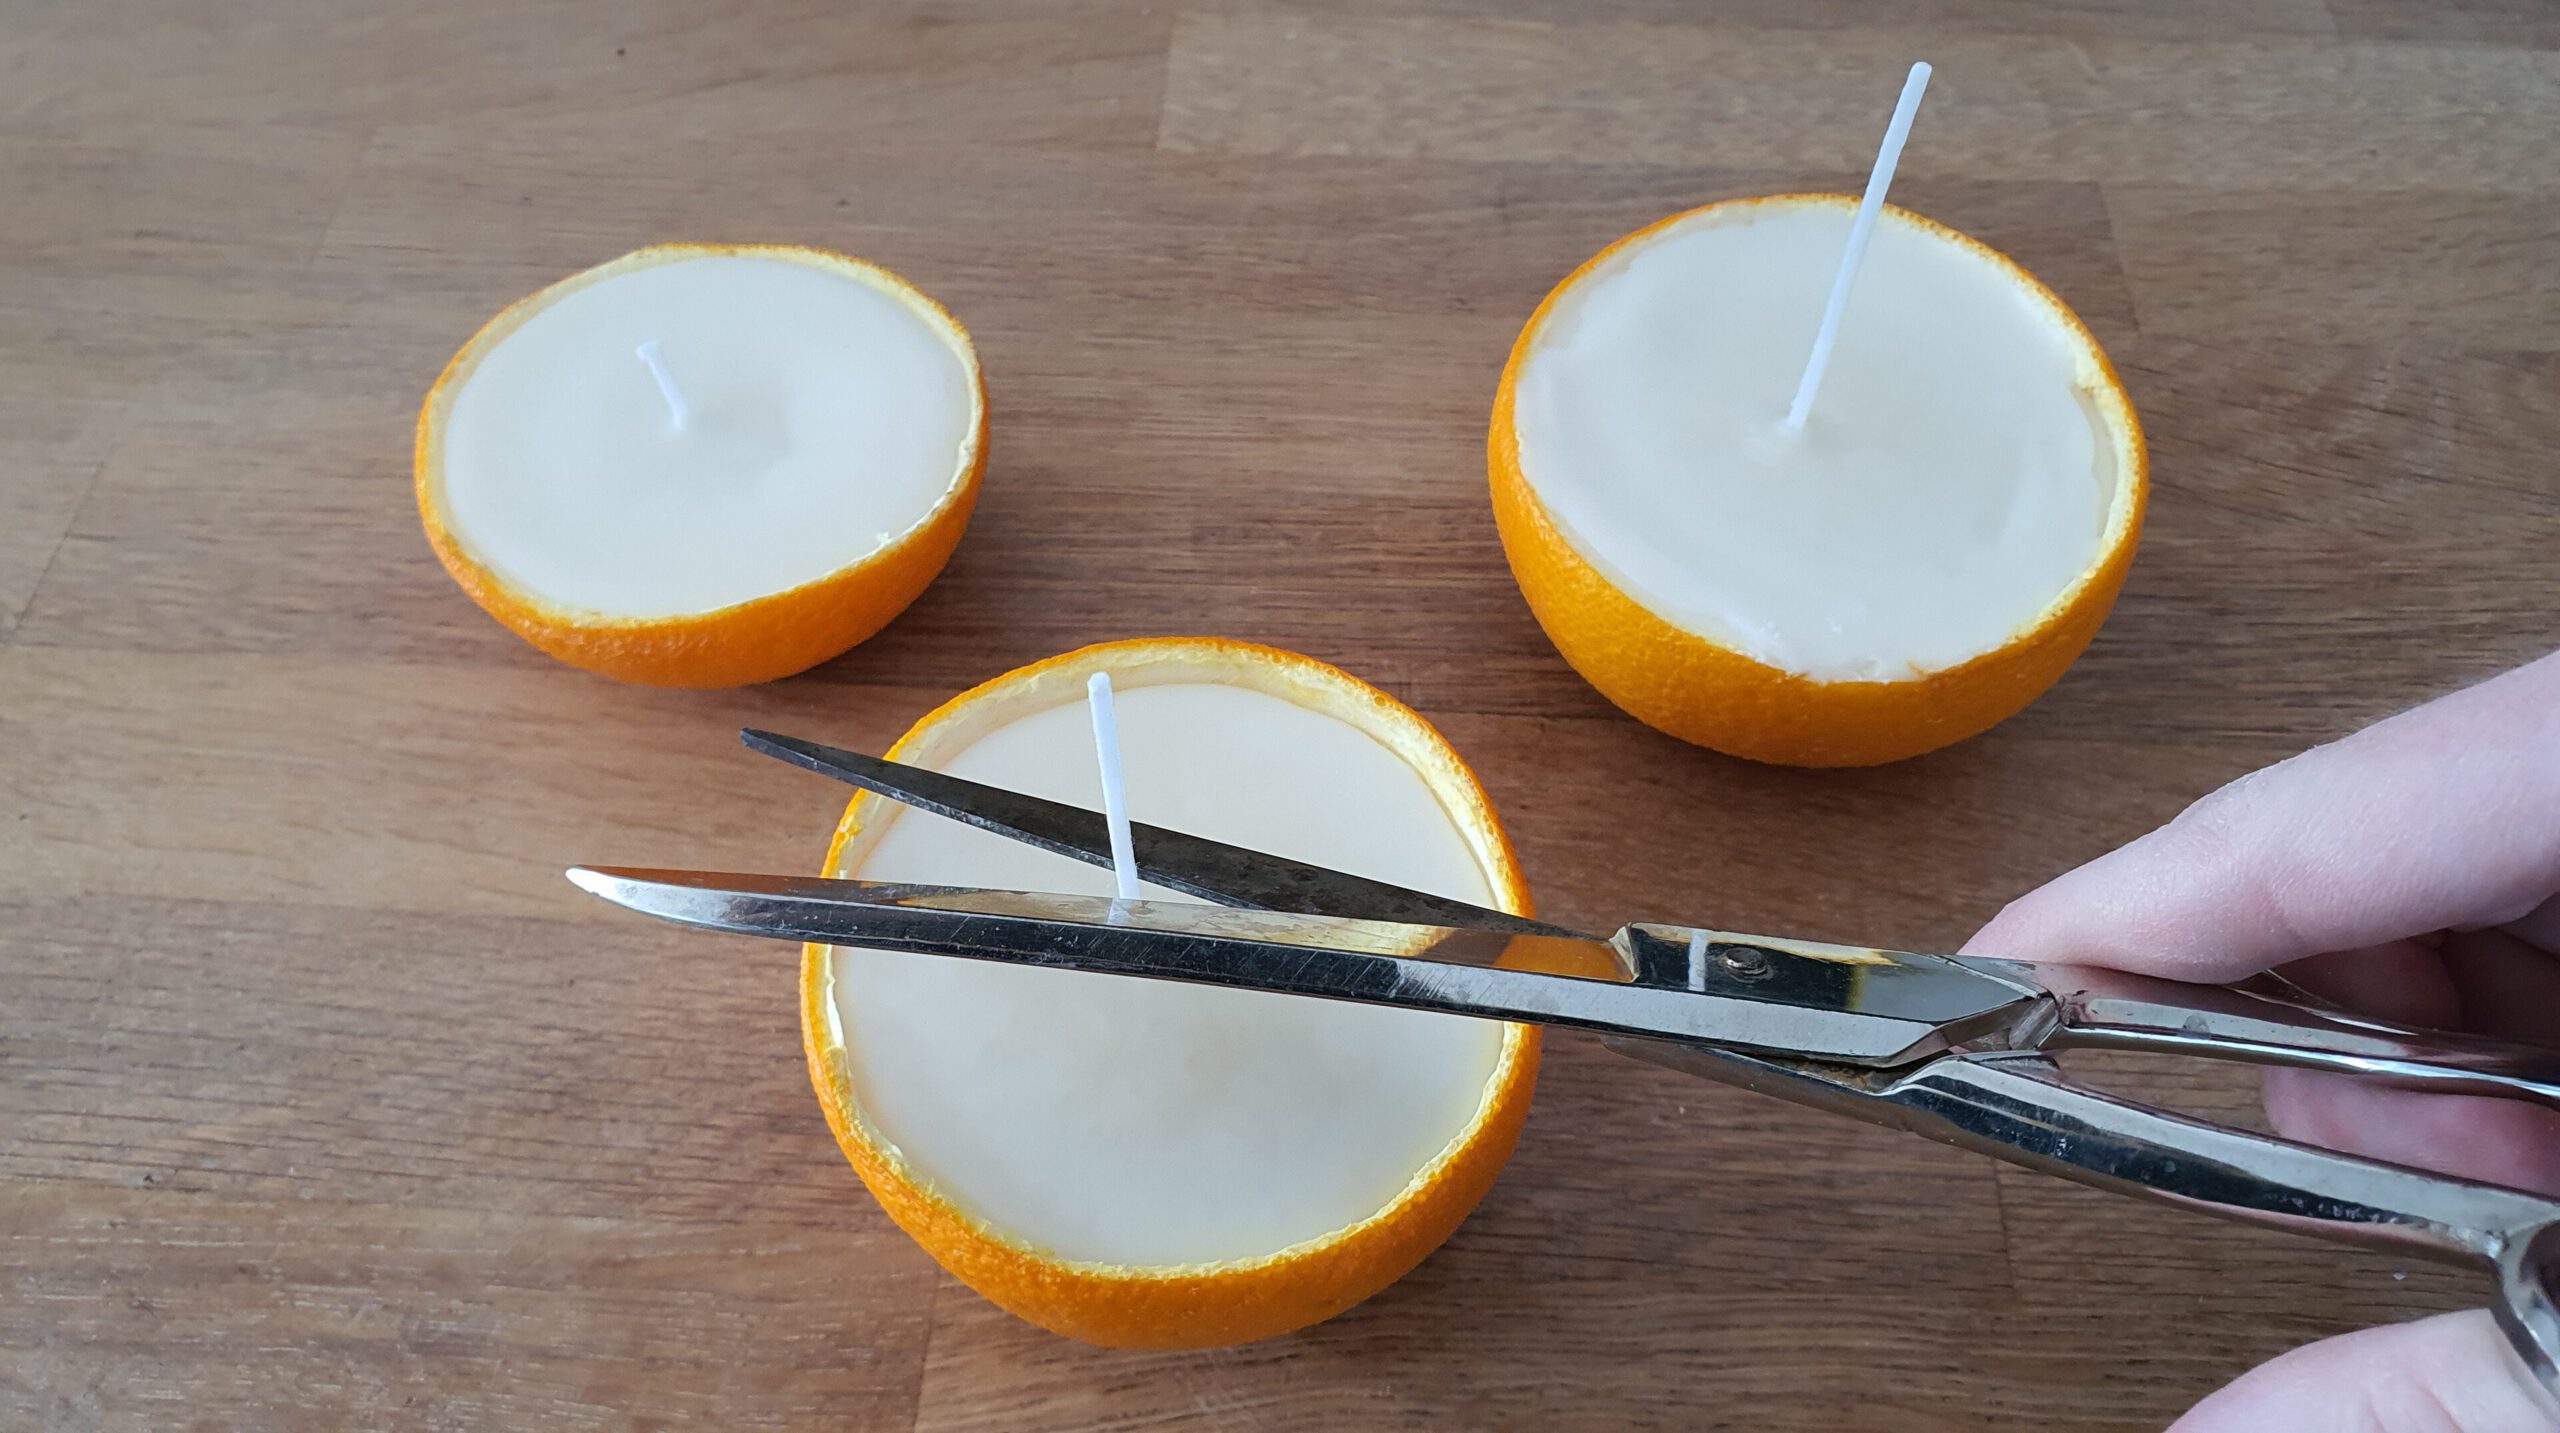 Kerzengießen in Orangenschalen Schritt 5: Docht kürzen